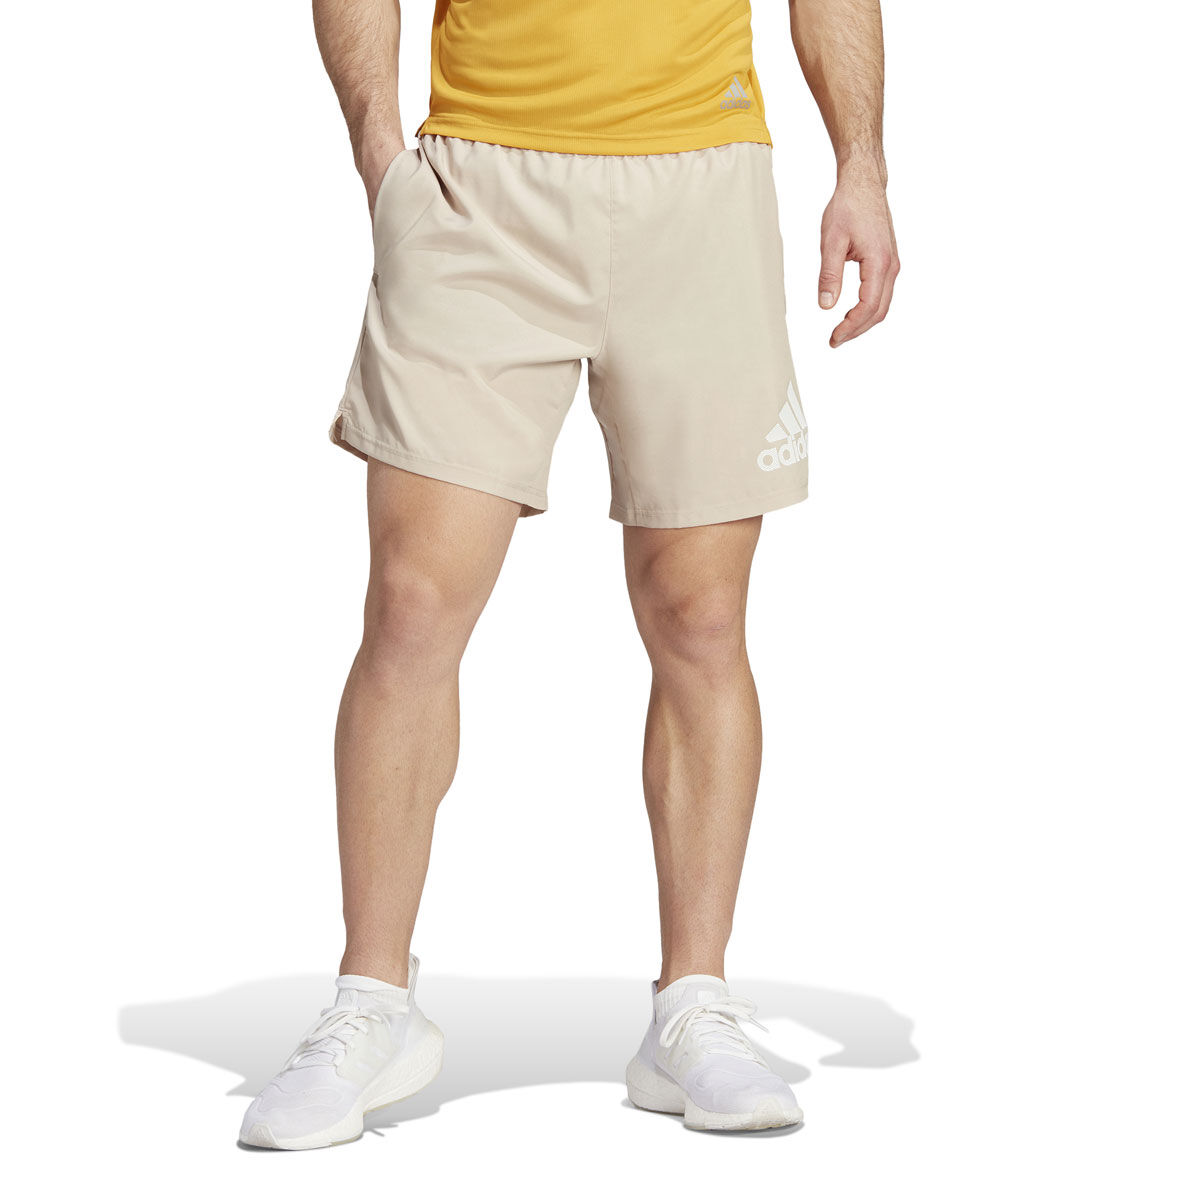 Mens Pants  Shorts For Sale Online Australia  BCF Australia